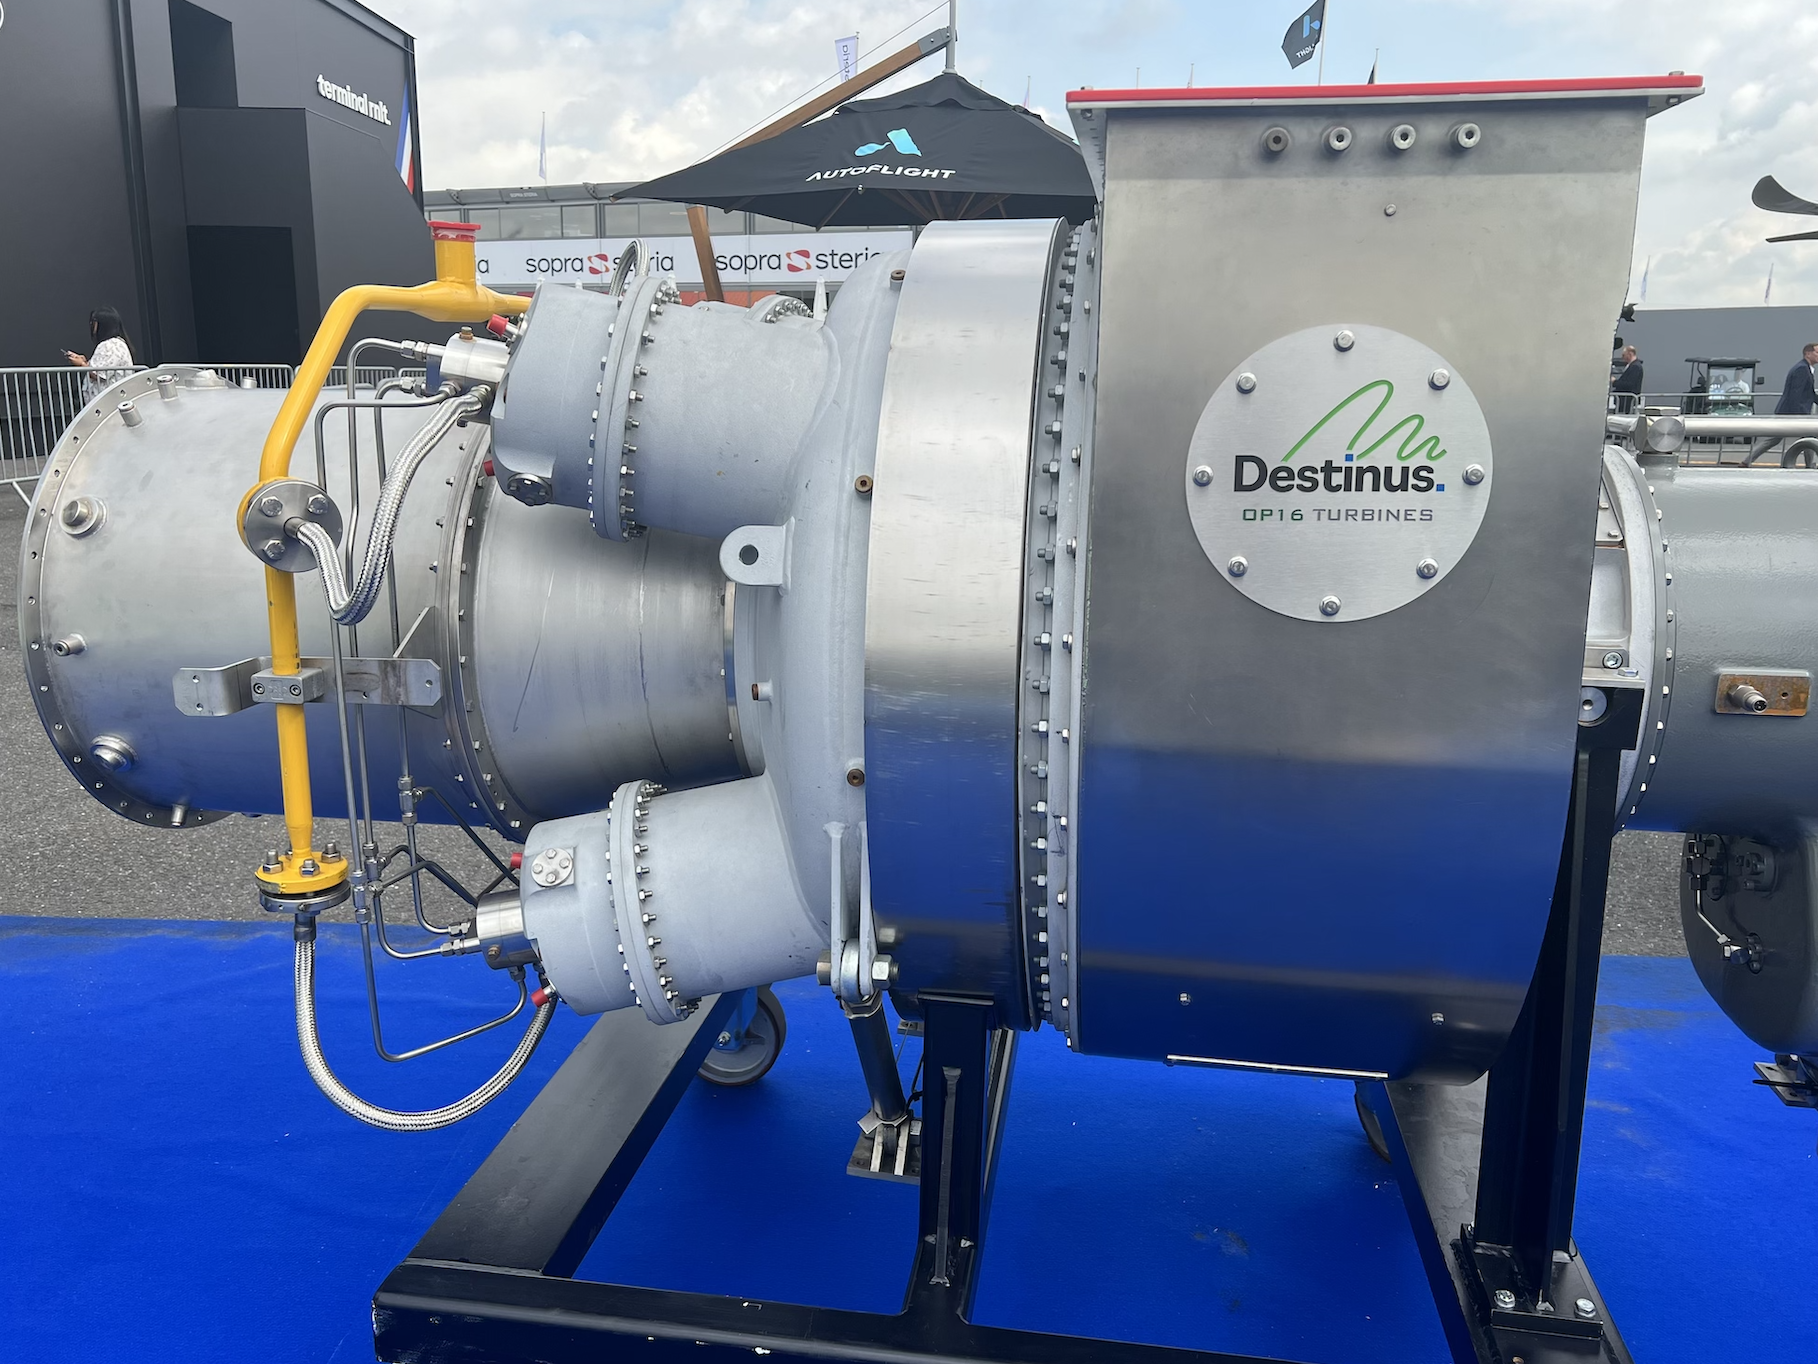 Destinus' gas turbine.